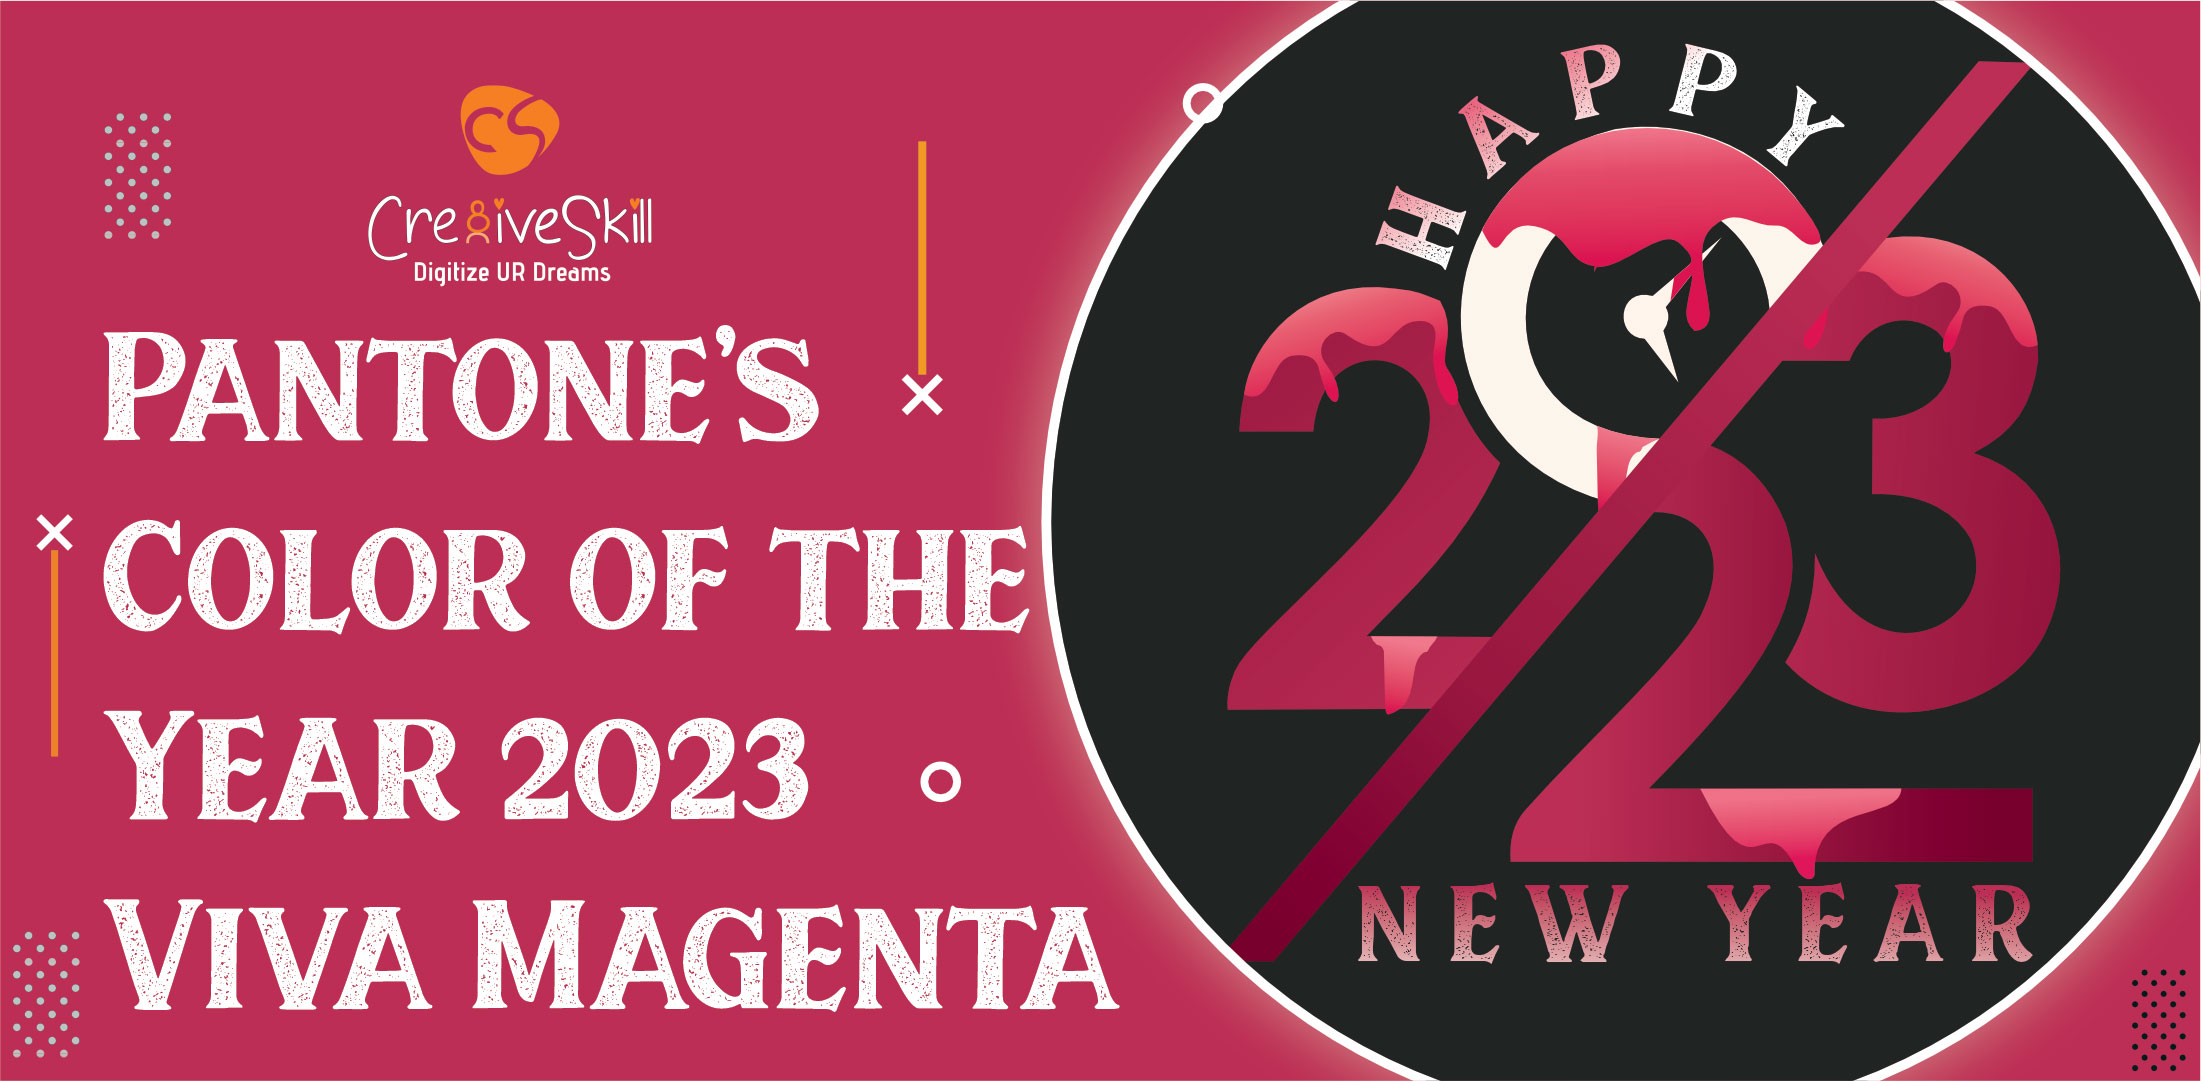 Pantone names Viva Magenta as colour of the year 2023